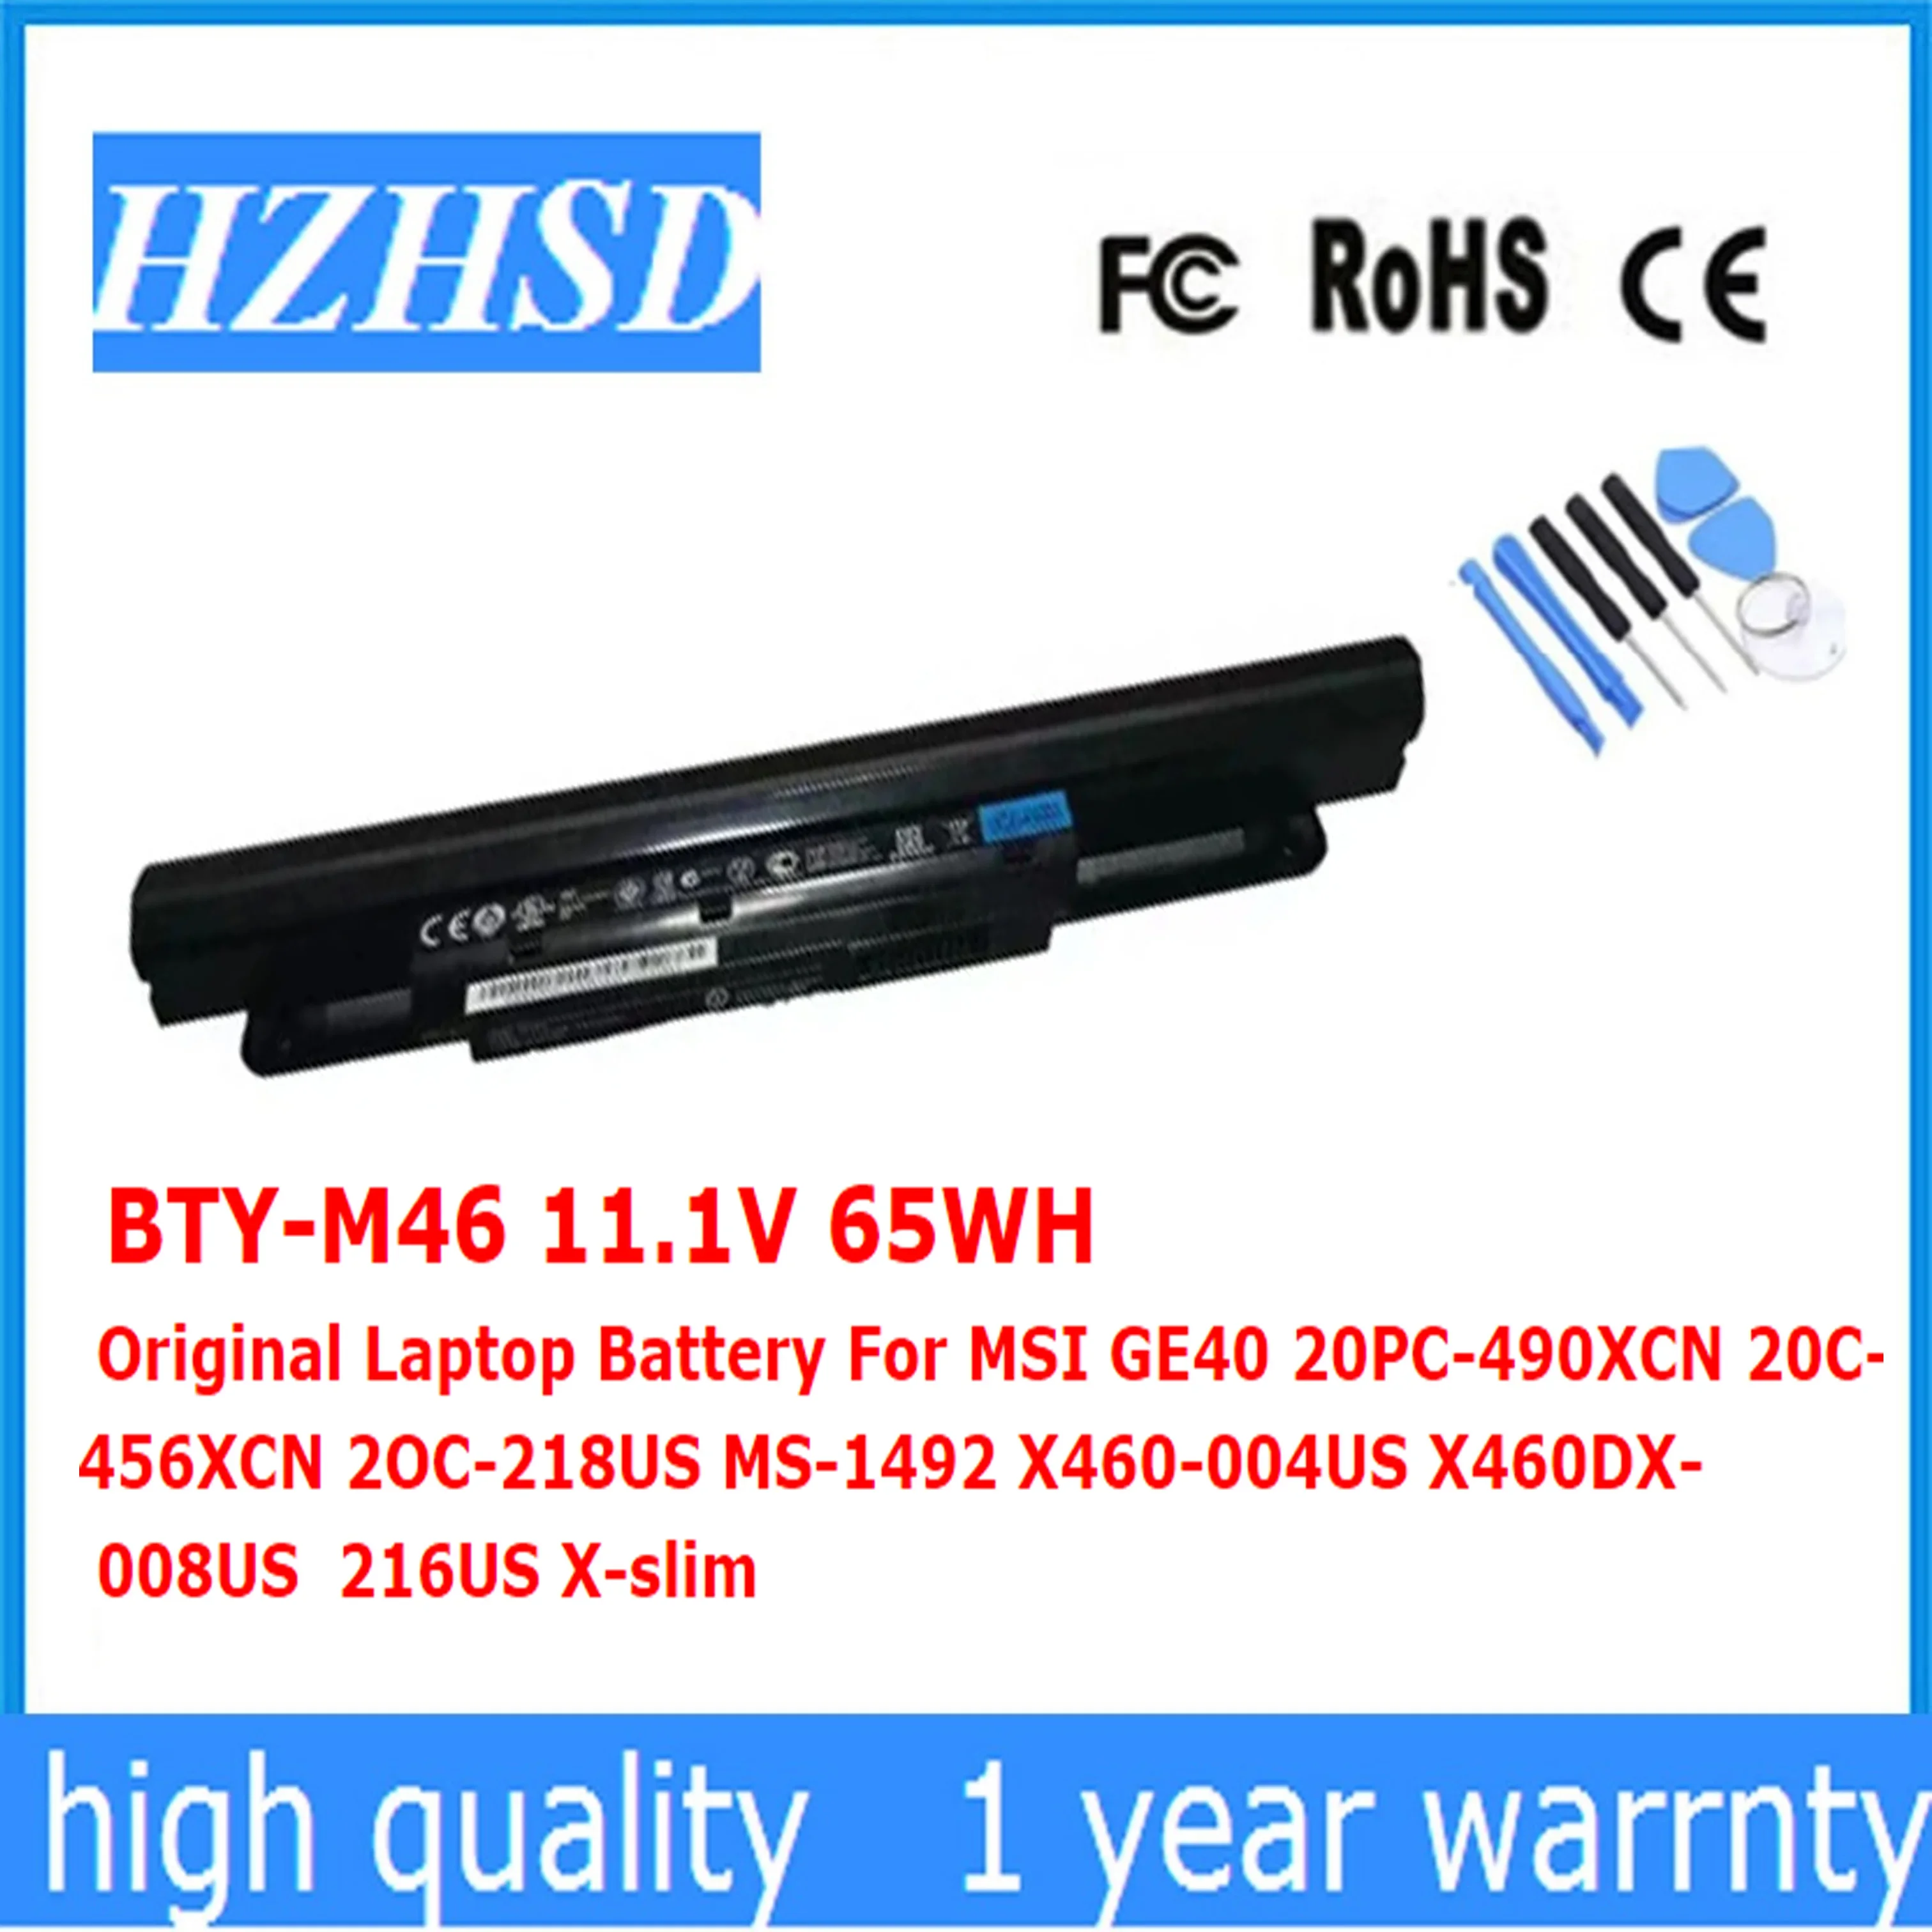 

BTY-M46 11,1 V 65WH Оригинальная батарея для ноутбука MSI GE40 20PC-490XCN 20C-456XCN 2OC-218US